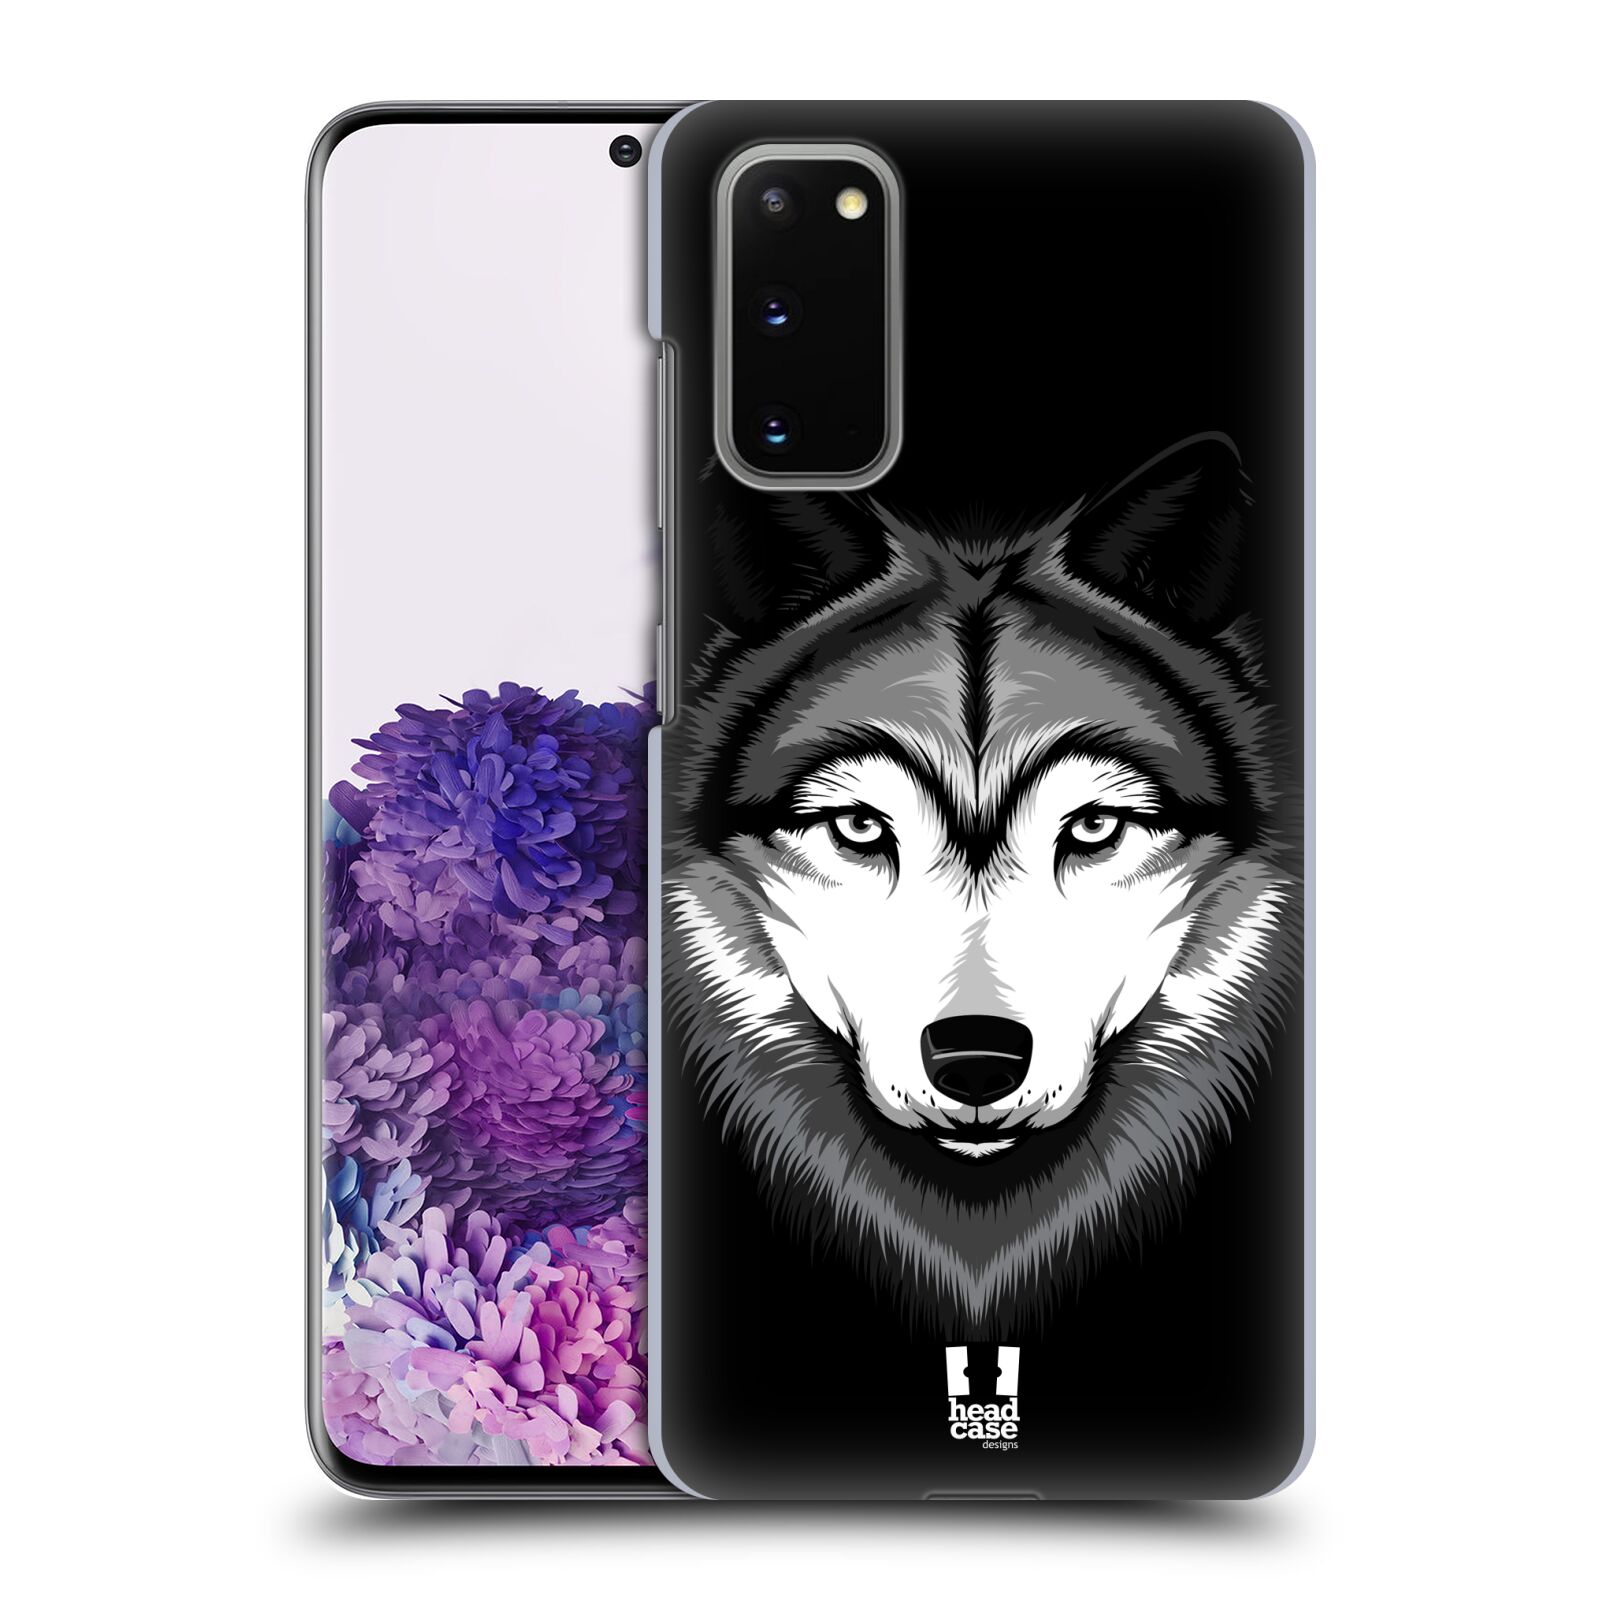 Pouzdro na mobil Samsung Galaxy S20 - HEAD CASE - vzor Zvíře kreslená tvář 2 vlk